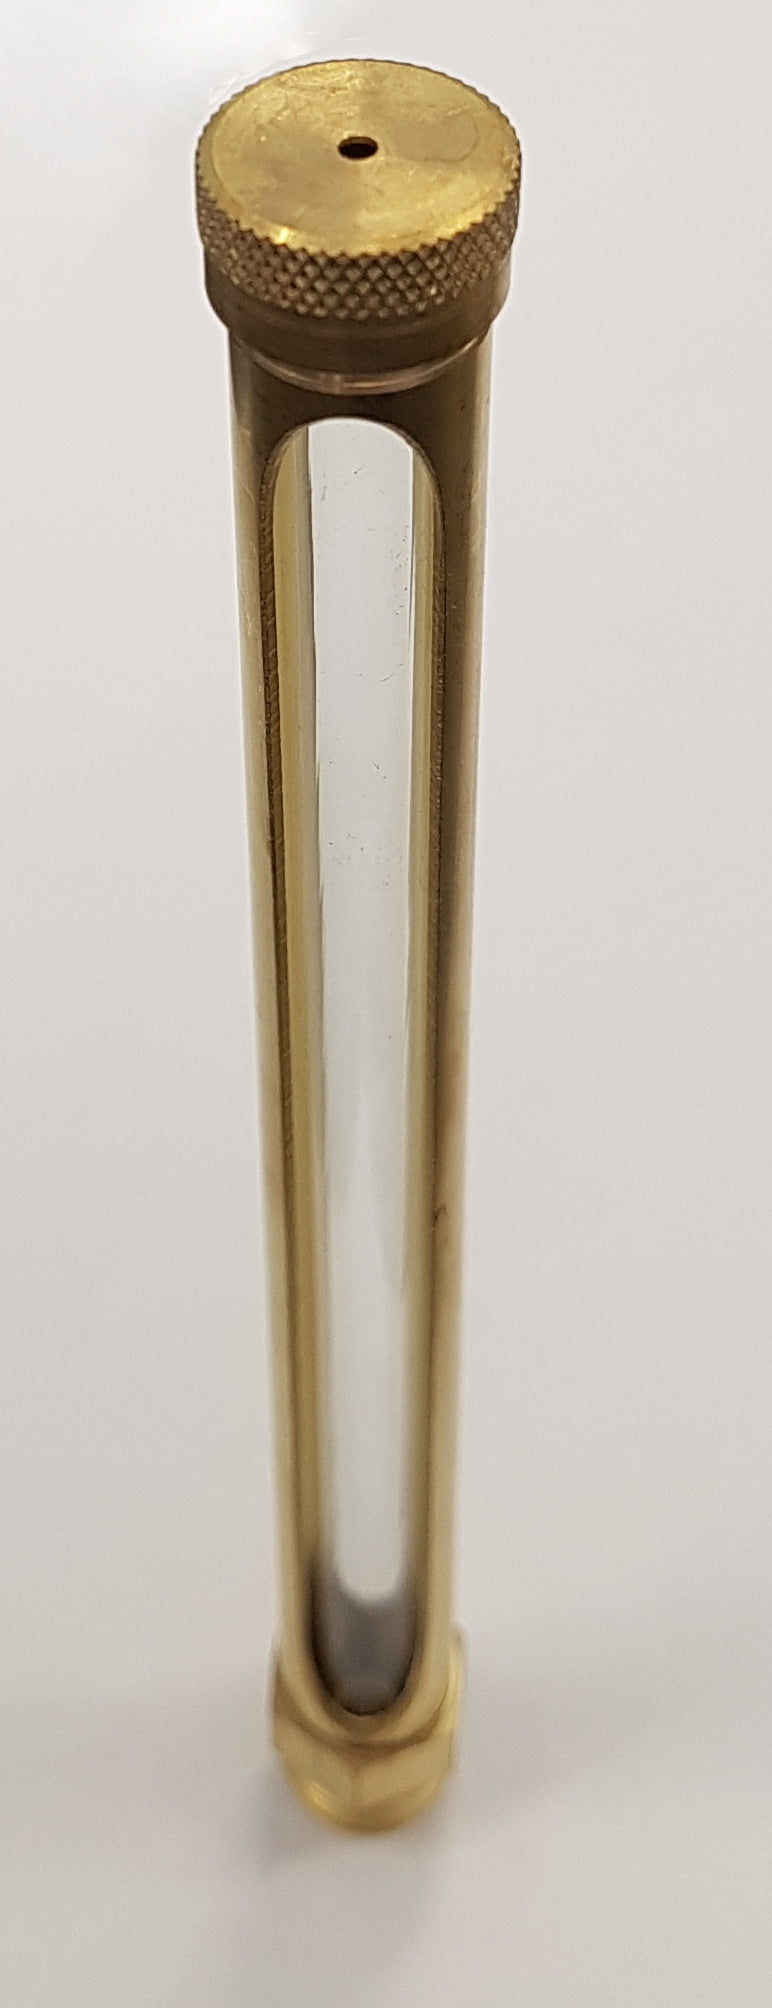 Brass straight oil position indicator type 226 - 40 x 3/8 BSP